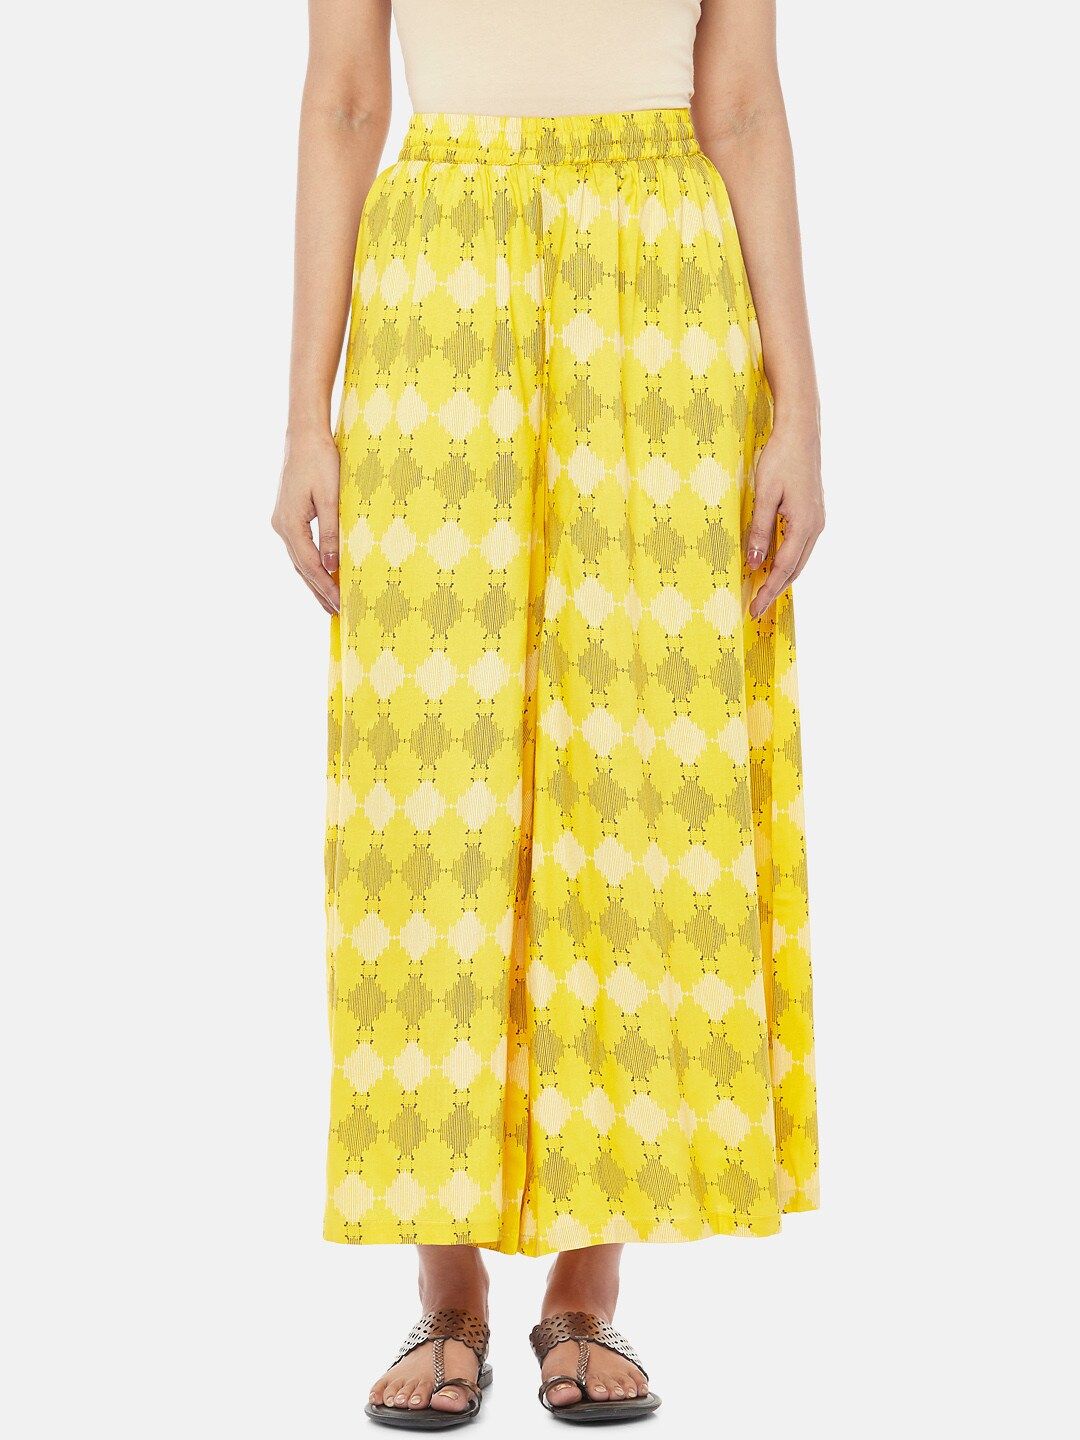 RANGMANCH BY PANTALOONS Women Yellow & White Printed Wide Leg Palazzos Price in India